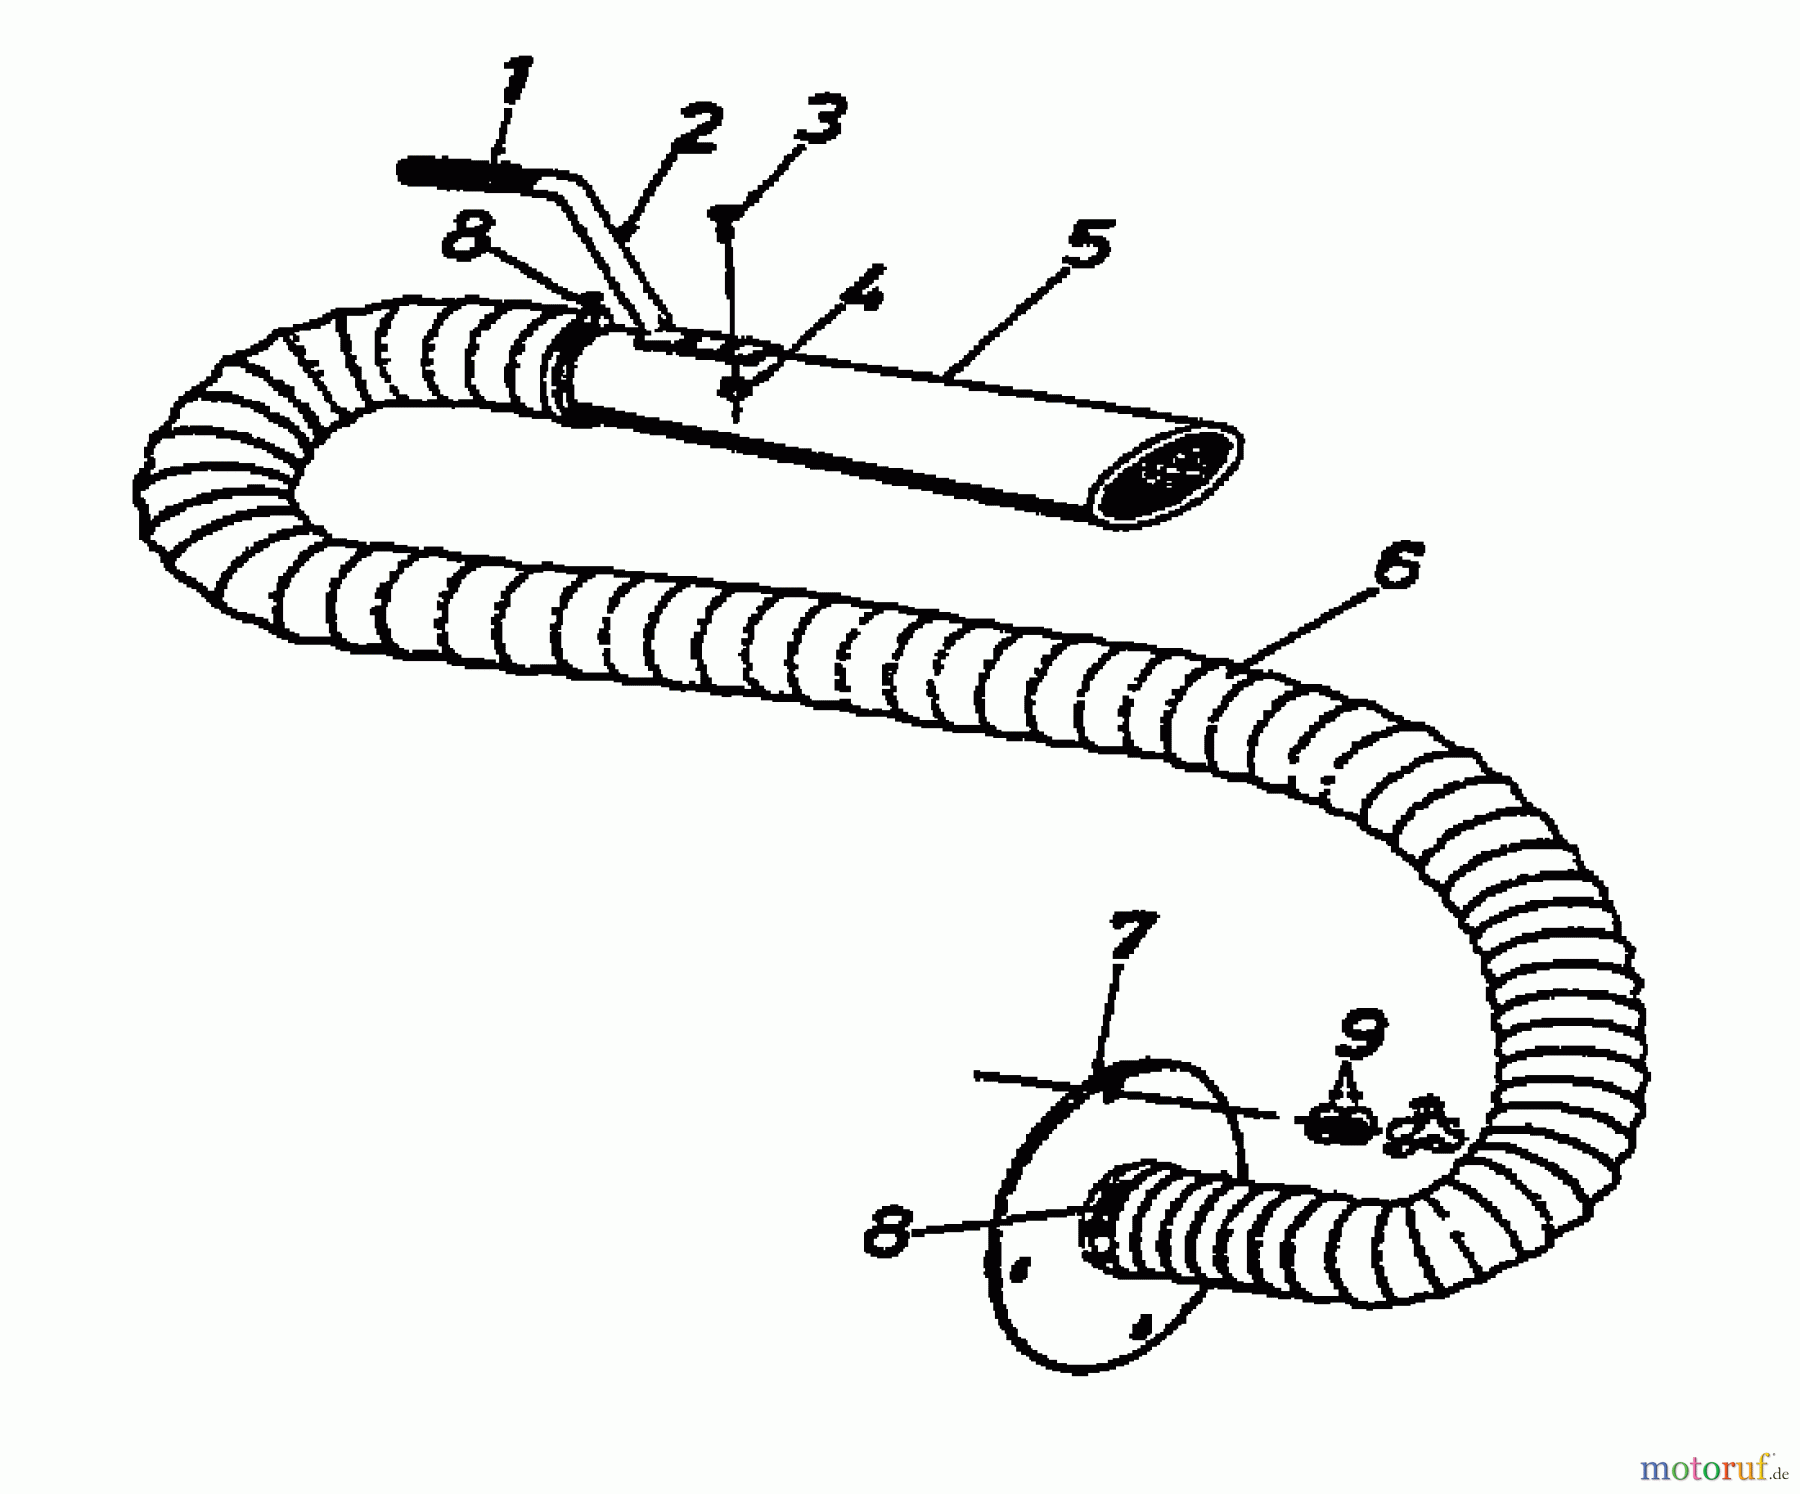  MTD Leaf blower, Blower vac 685 245-685-000  (1985) Vaccum hose